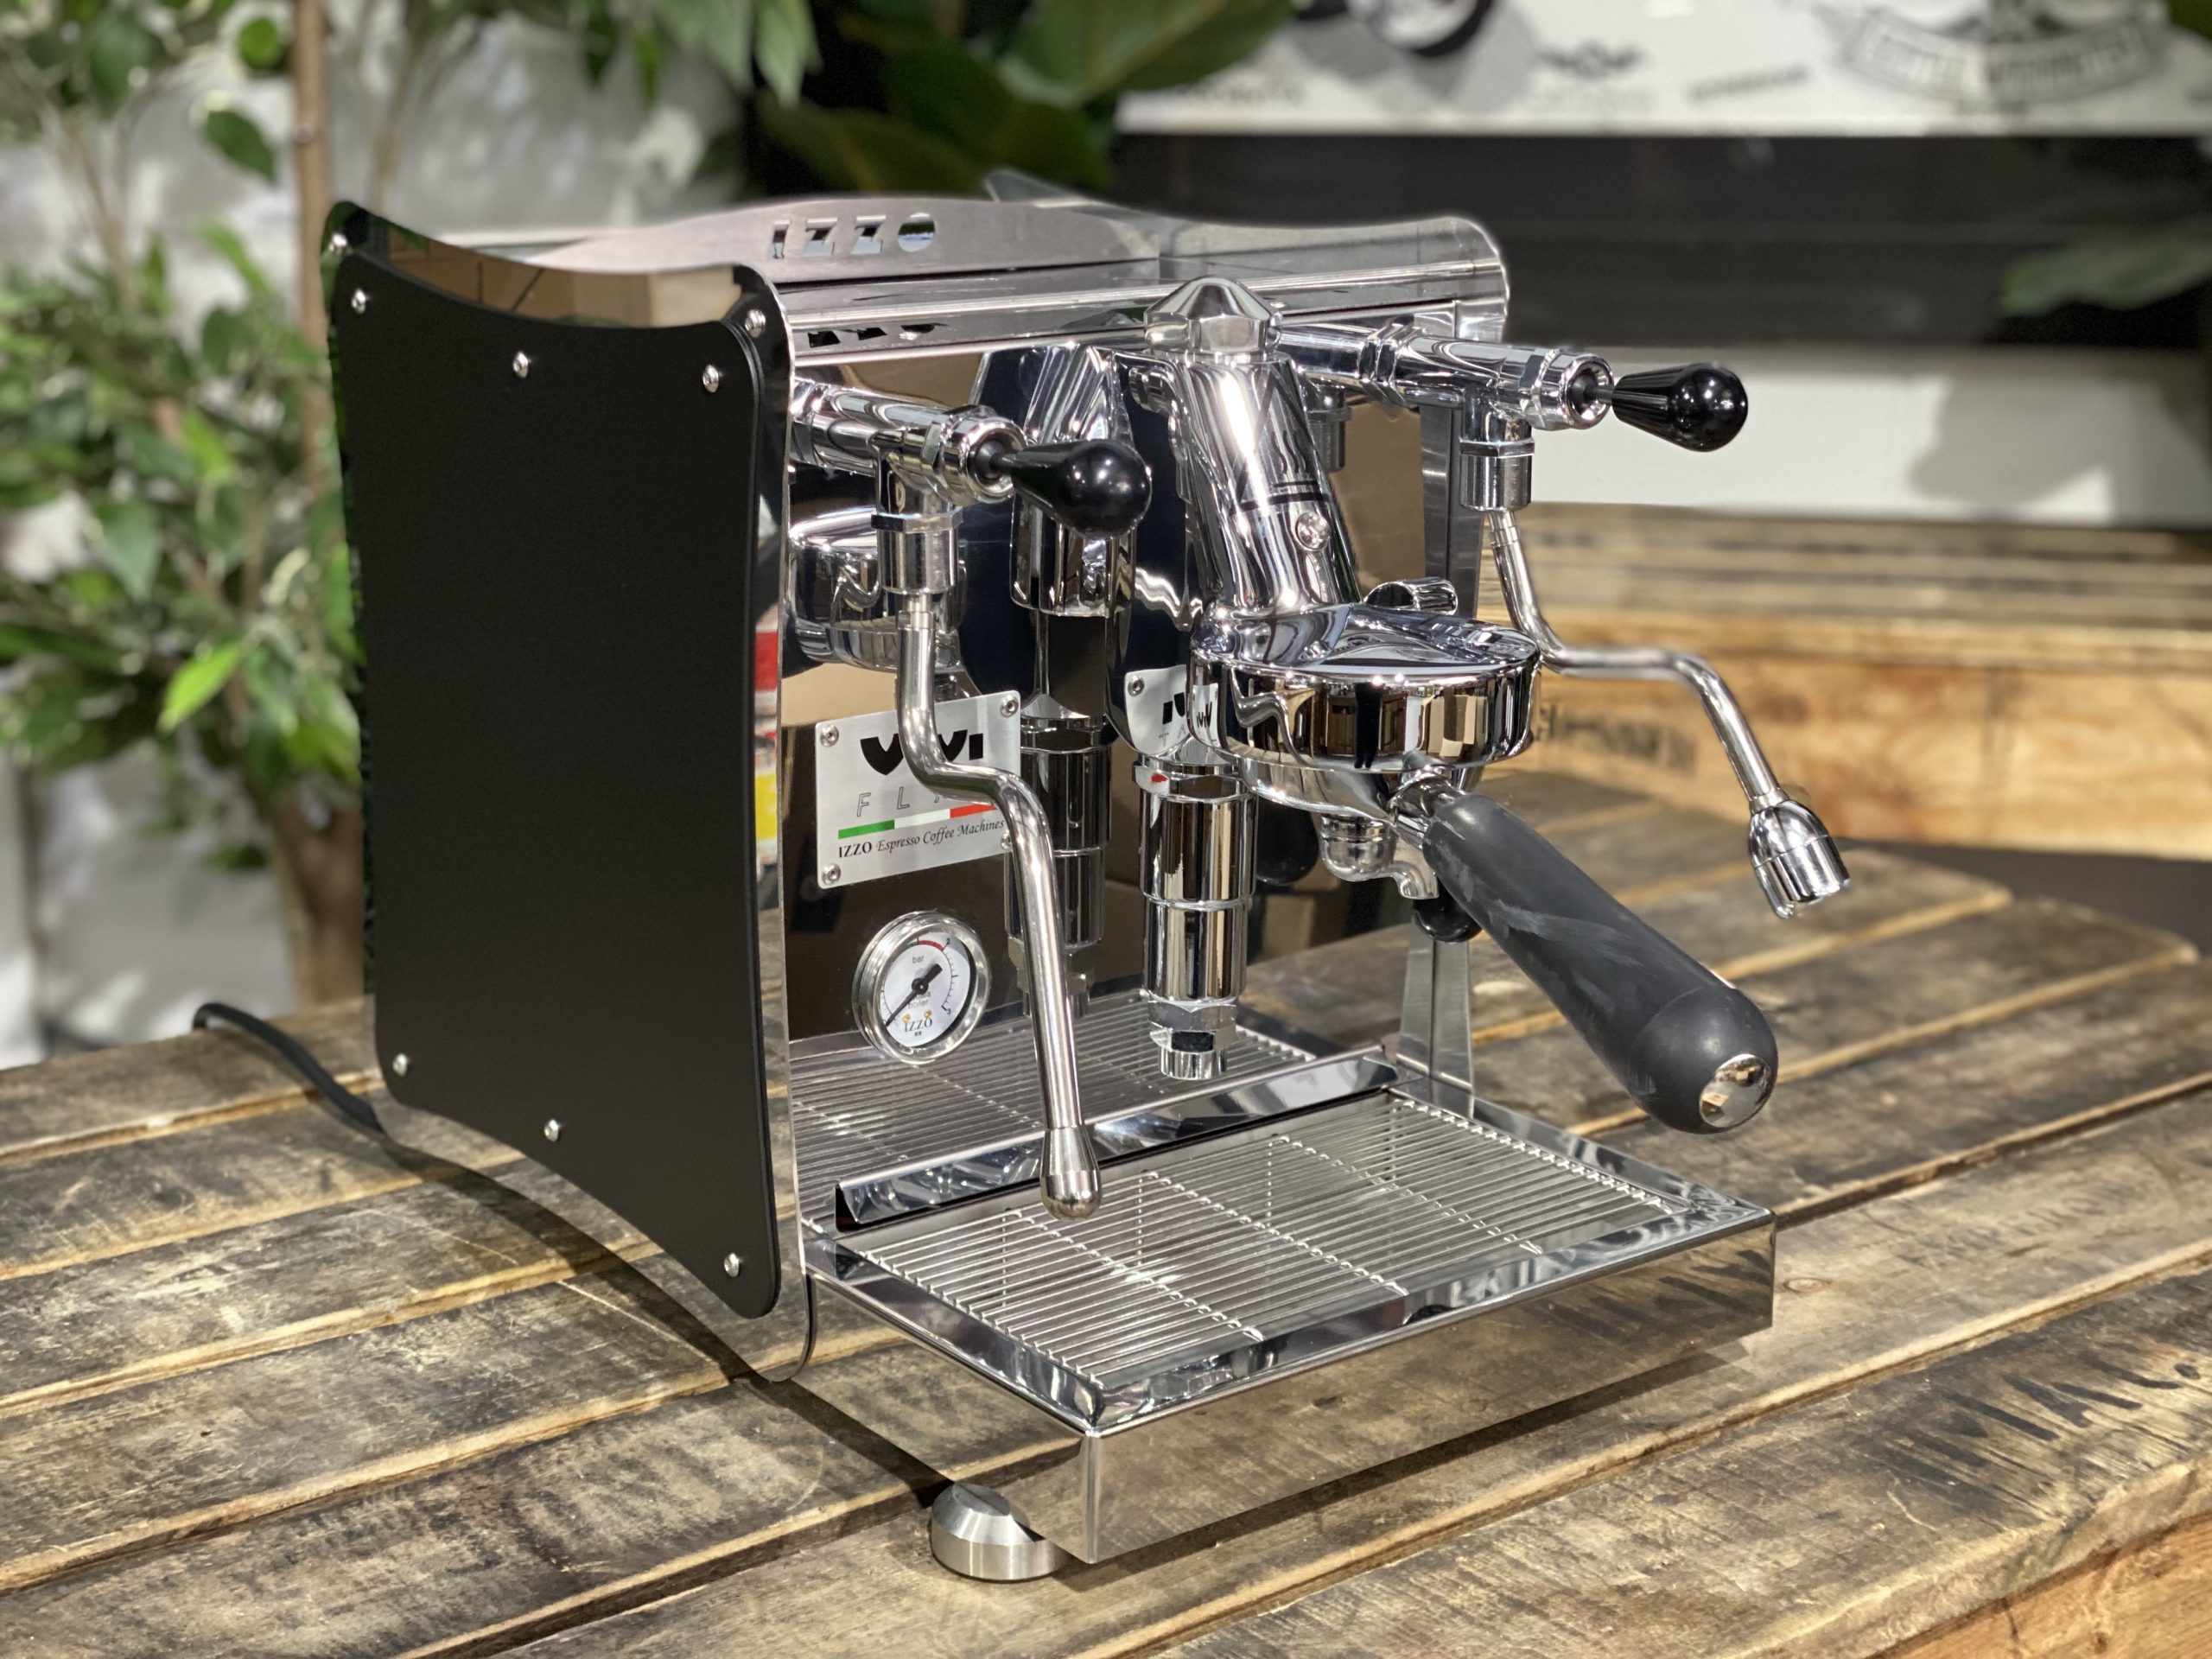 Izzo-Vivi-Flat-1-Group-Black-New-Espresso-Coffee-Machine-1858-Princes-Highway-Clayton-VIC-3168-Coffee-Machine-WarehouseIMG_4244-scaled